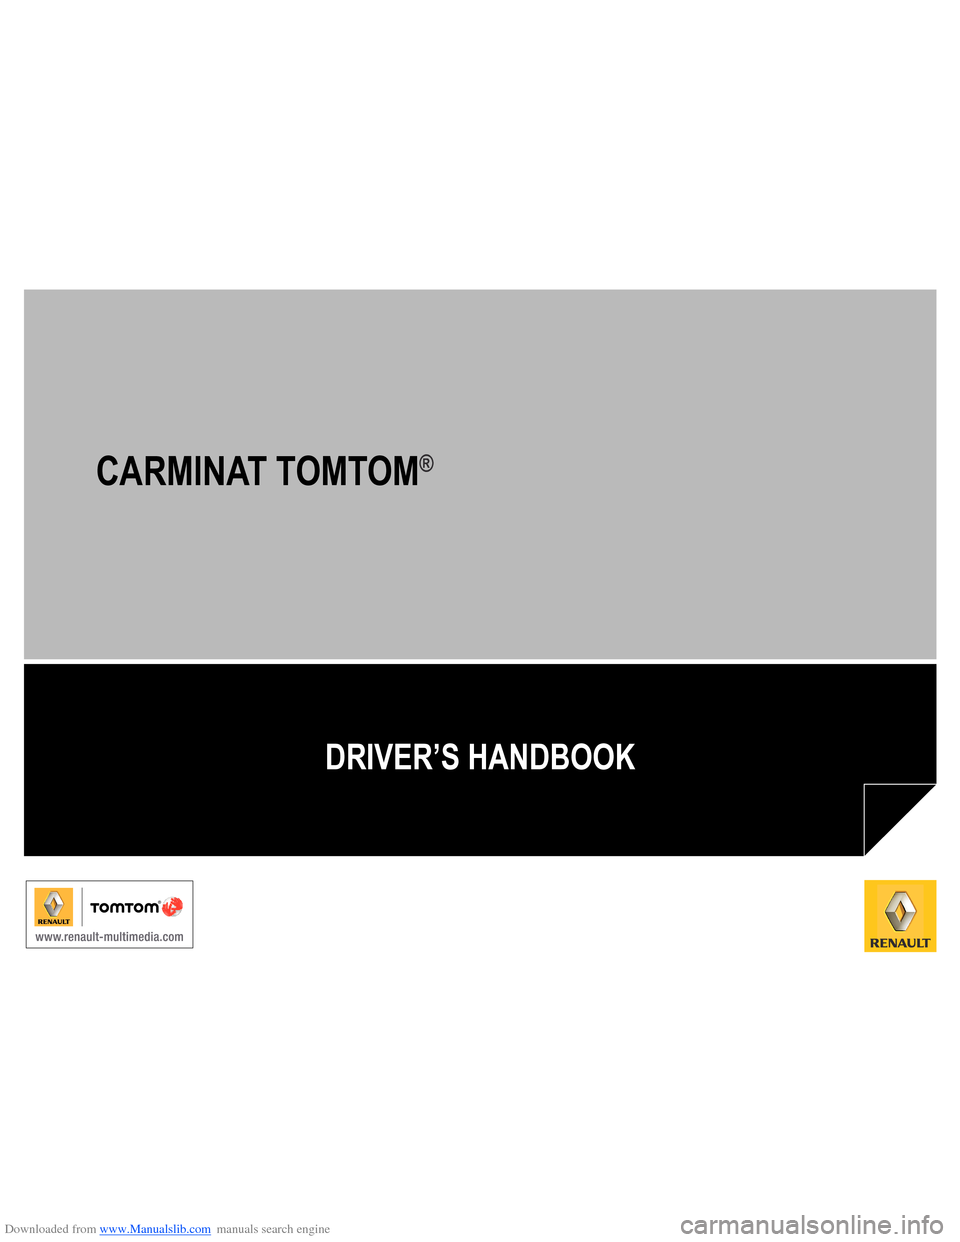 RENAULT LAGUNA 2013 X91 / 3.G Carminat Tomtom Navigation Owners Manual Downloaded from www.Manualslib.com manuals search engine 
DRIVER’S HANDBOOK
CARMINAT TOMTOM®  